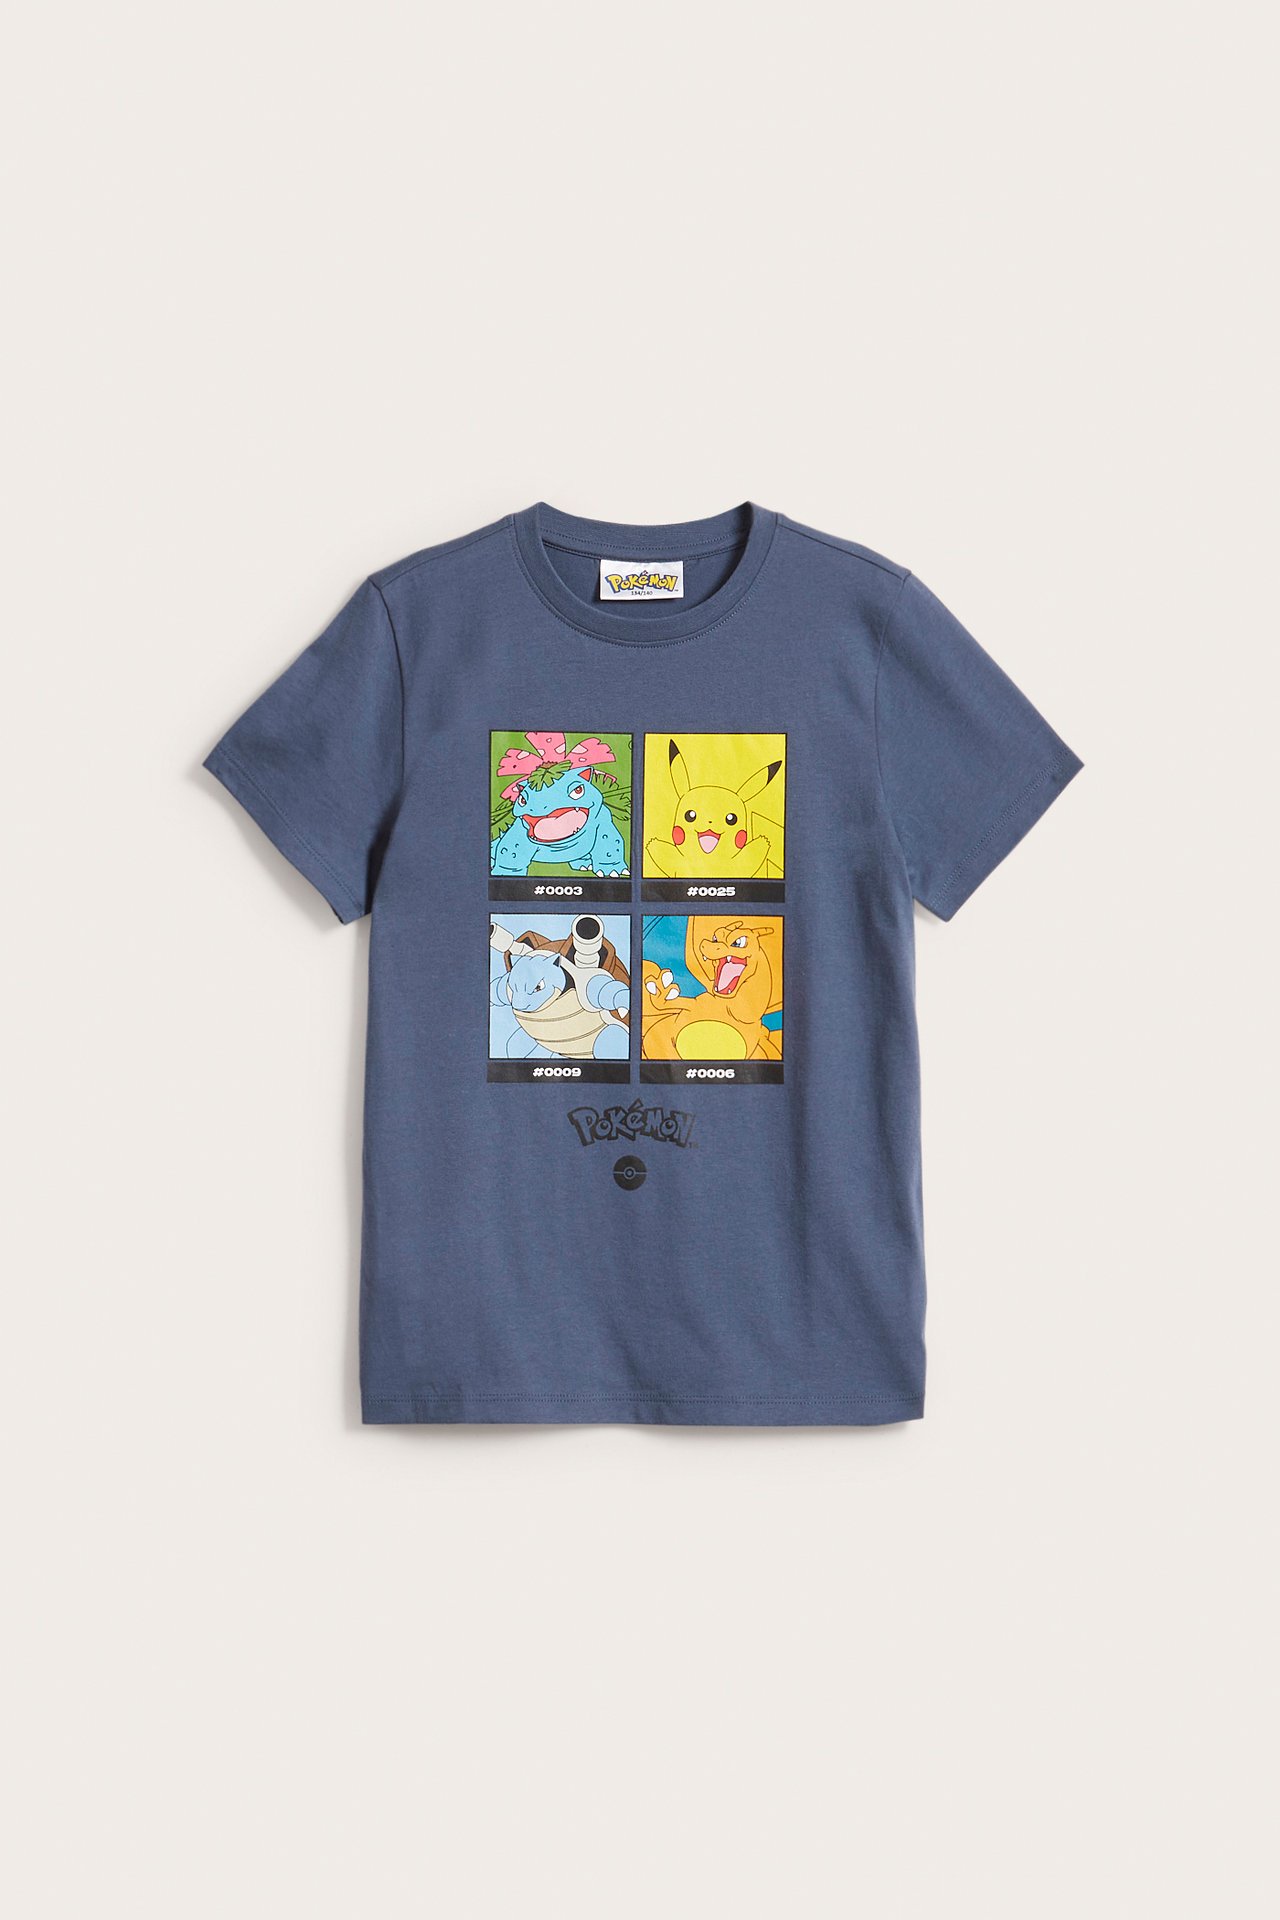 T-skjorte Pokémon